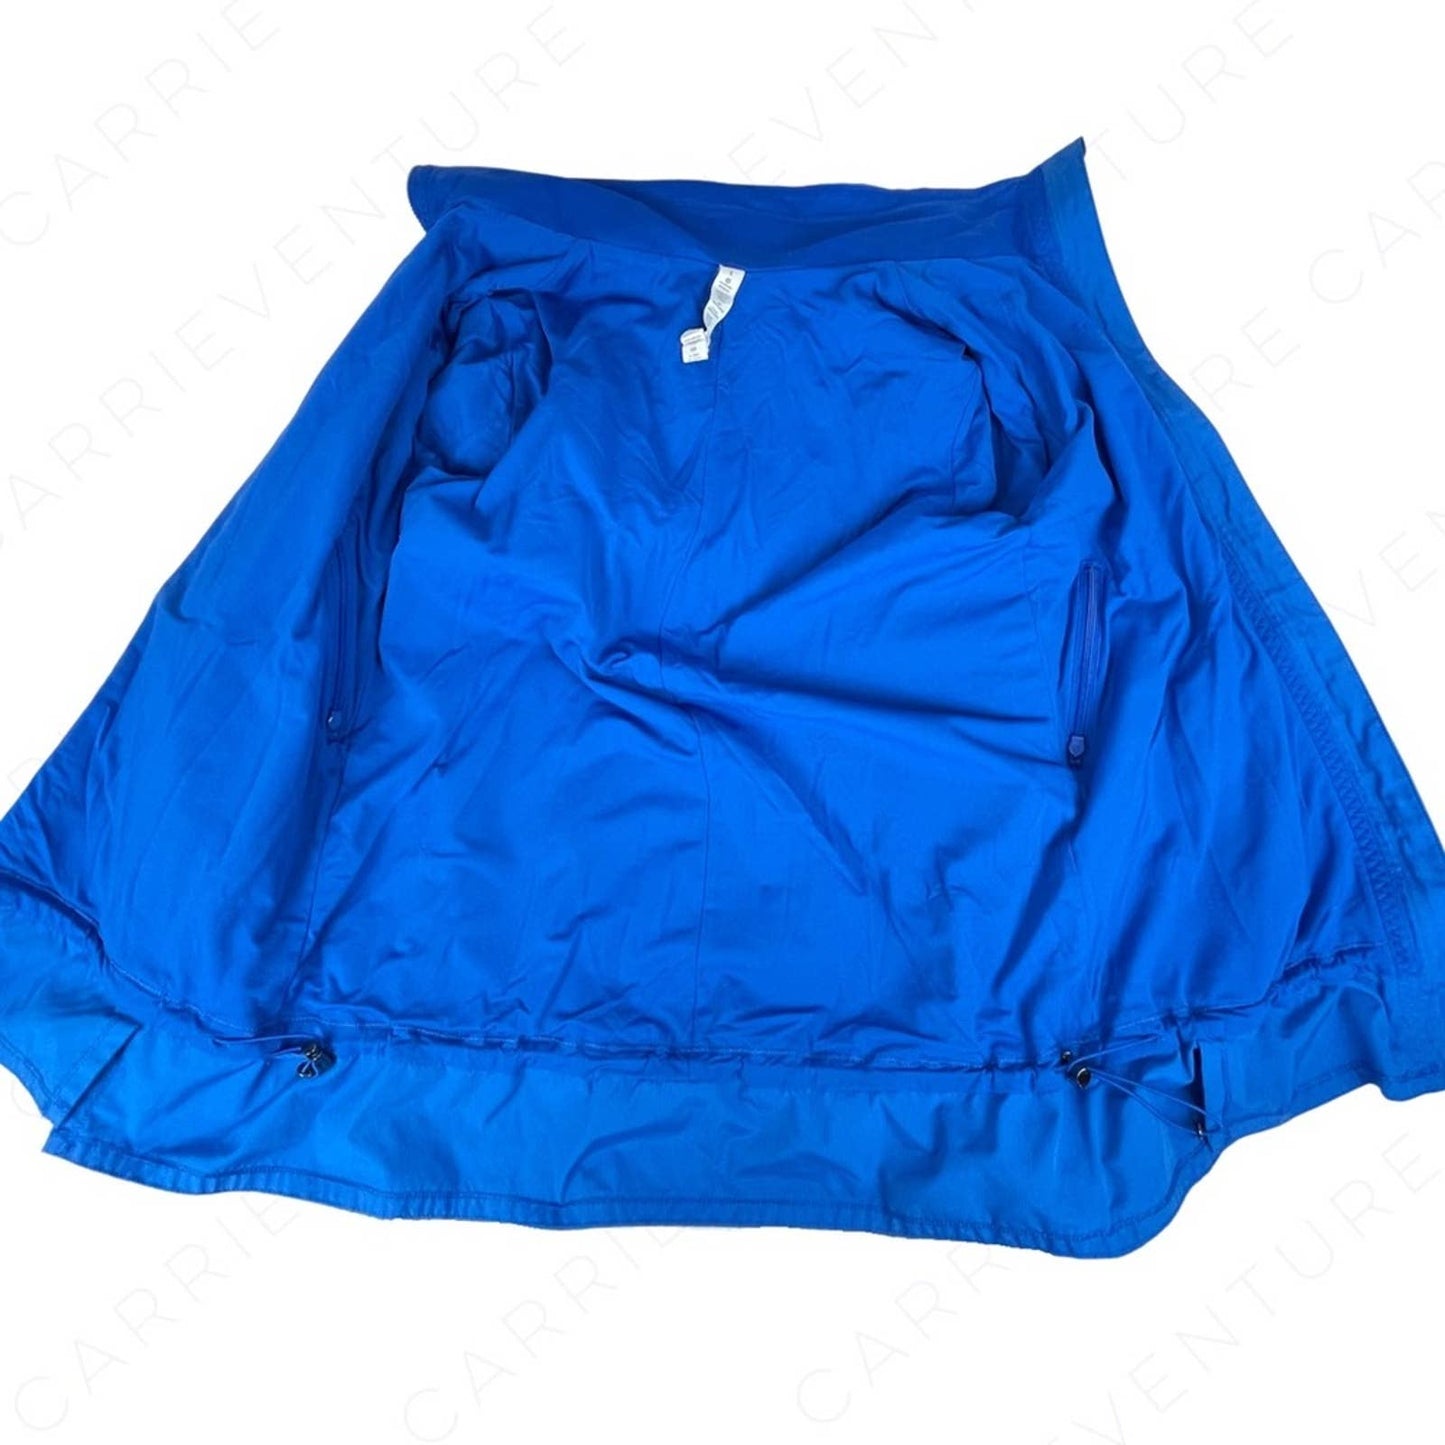 Lululemon Run Bandit Jacket Baroque Blue Removable Hood Running Utility Coat Size 6